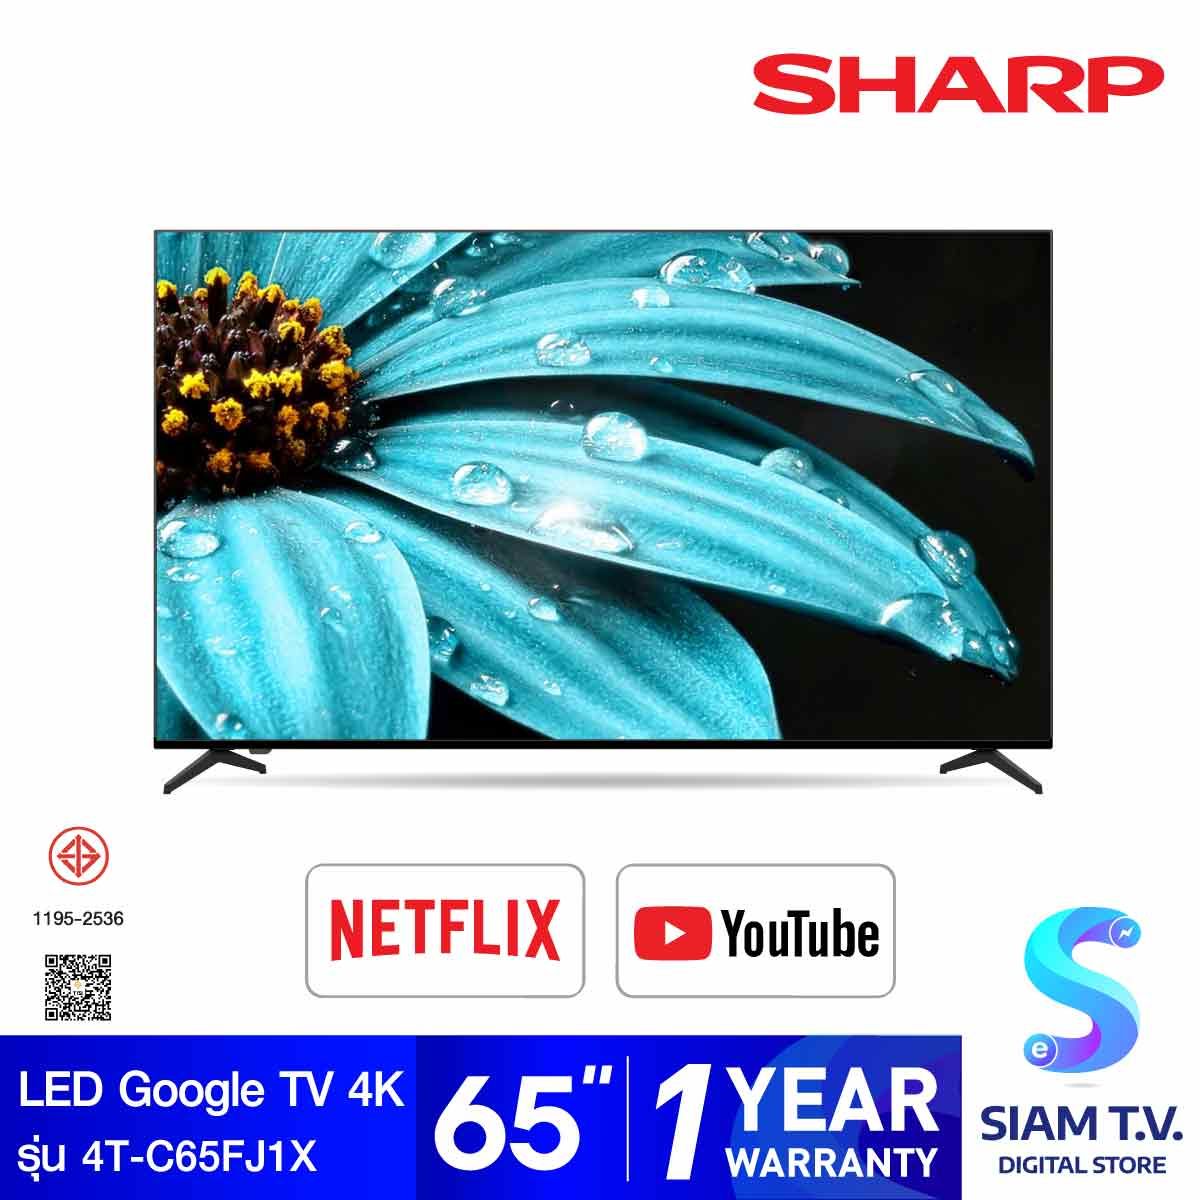 SHARP Google TV AQUOS 4K รุ่น C65FJ1X สมาร์ททีวีขนาด 65 นิ้ว